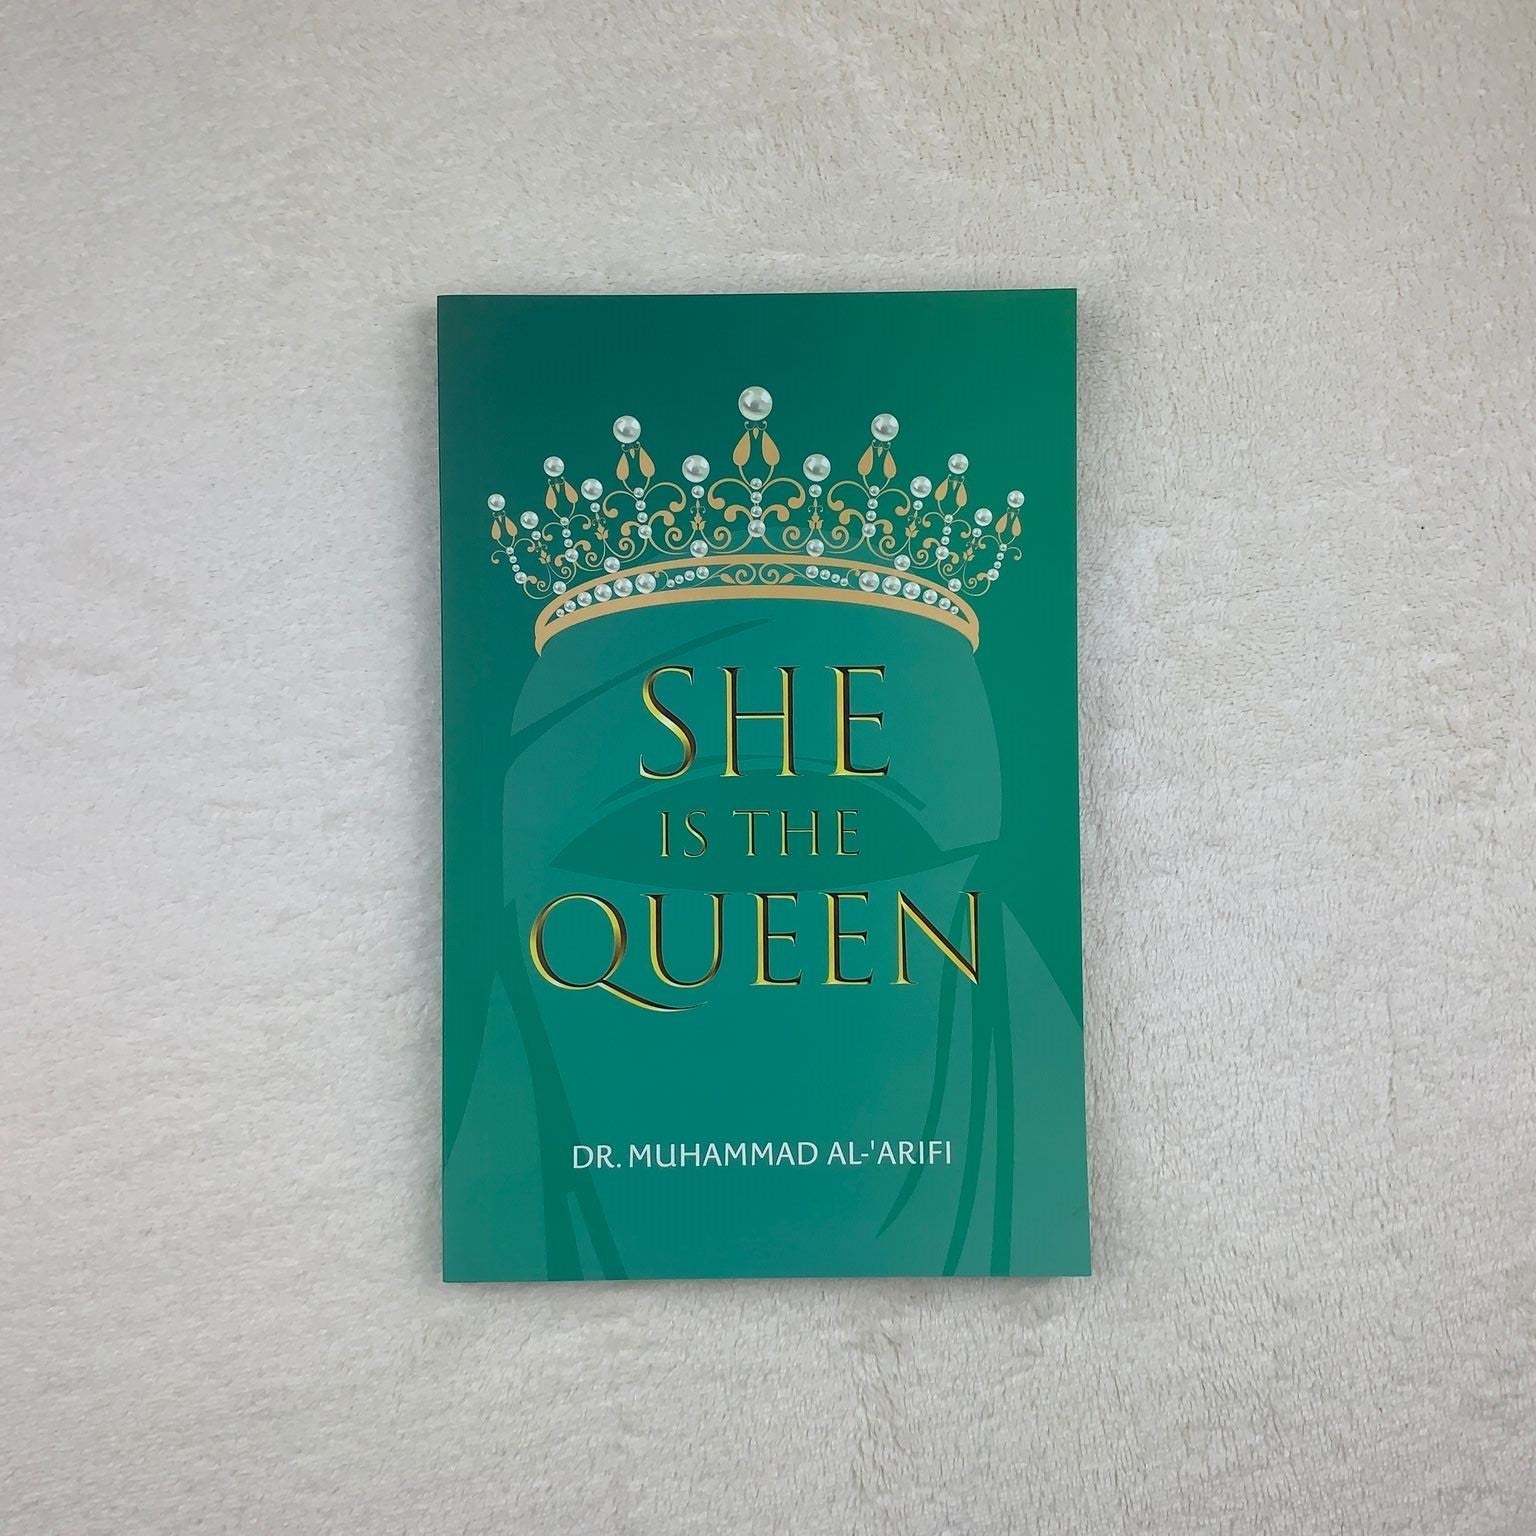 Dakwah Corner Bookstore Book She is The Queen by Dr. Muhammad Al-'Arifi 201059